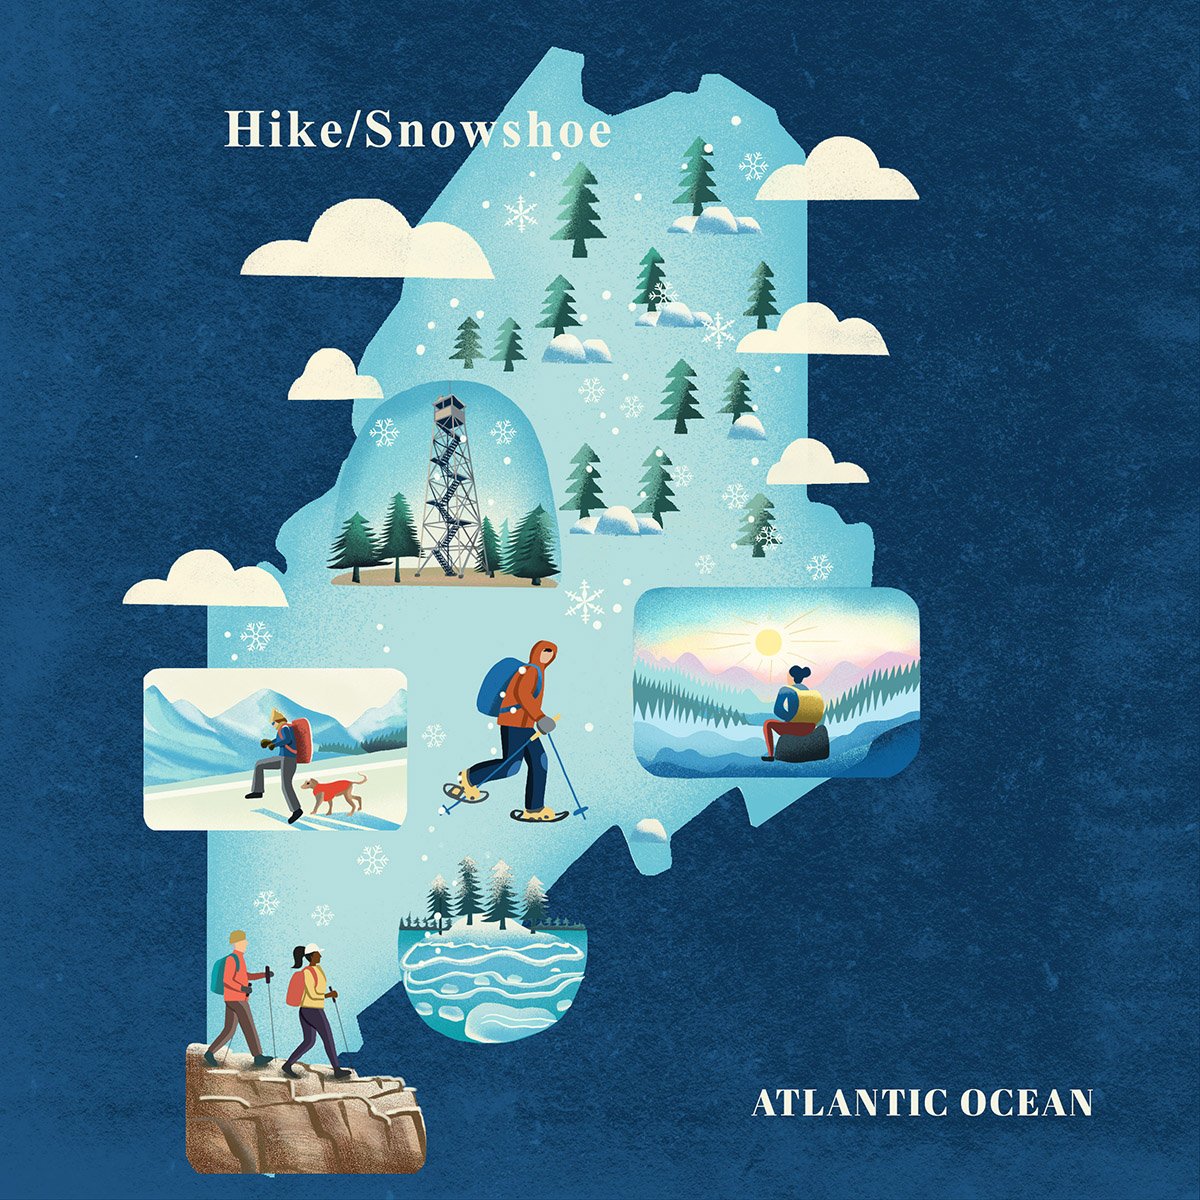 web_Hike_Winter_Maine interactive map copy 2.jpg